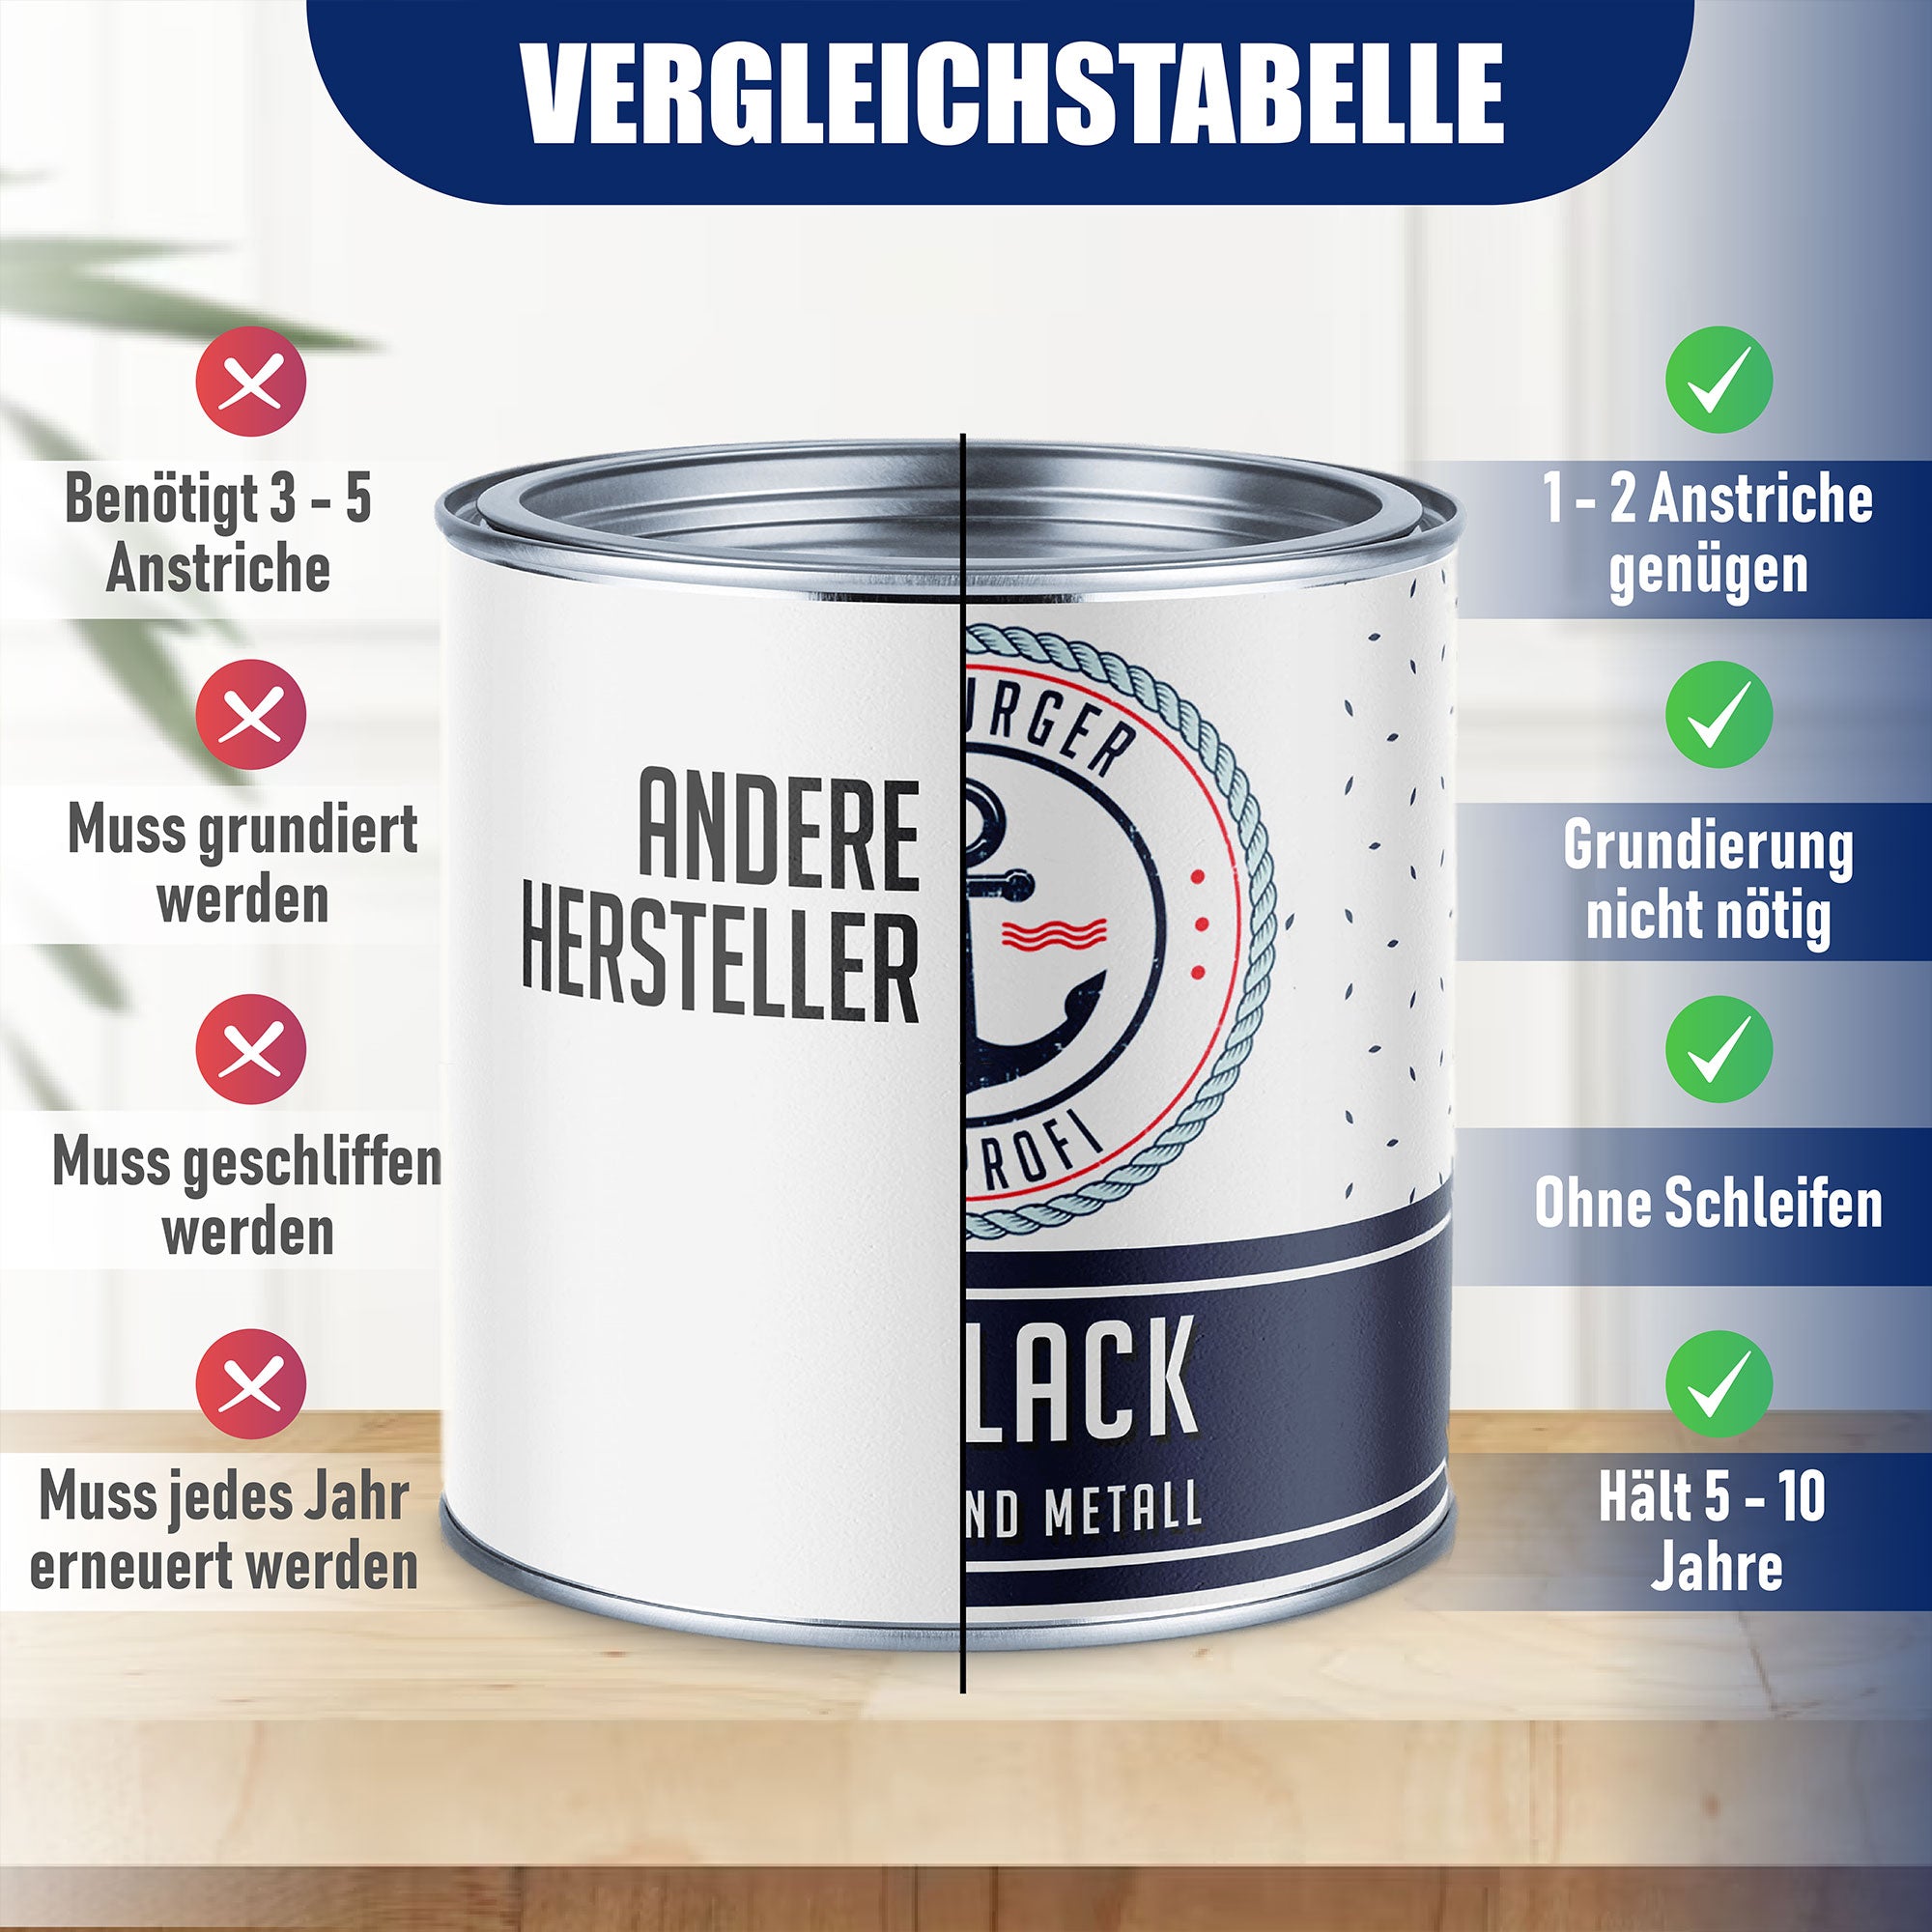 Hamburger Lack-Profi Buntlack in Grauweiß RAL 9002 mit Lackierset (X300) & Verdünnung (1 L) - 30% Sparangebot